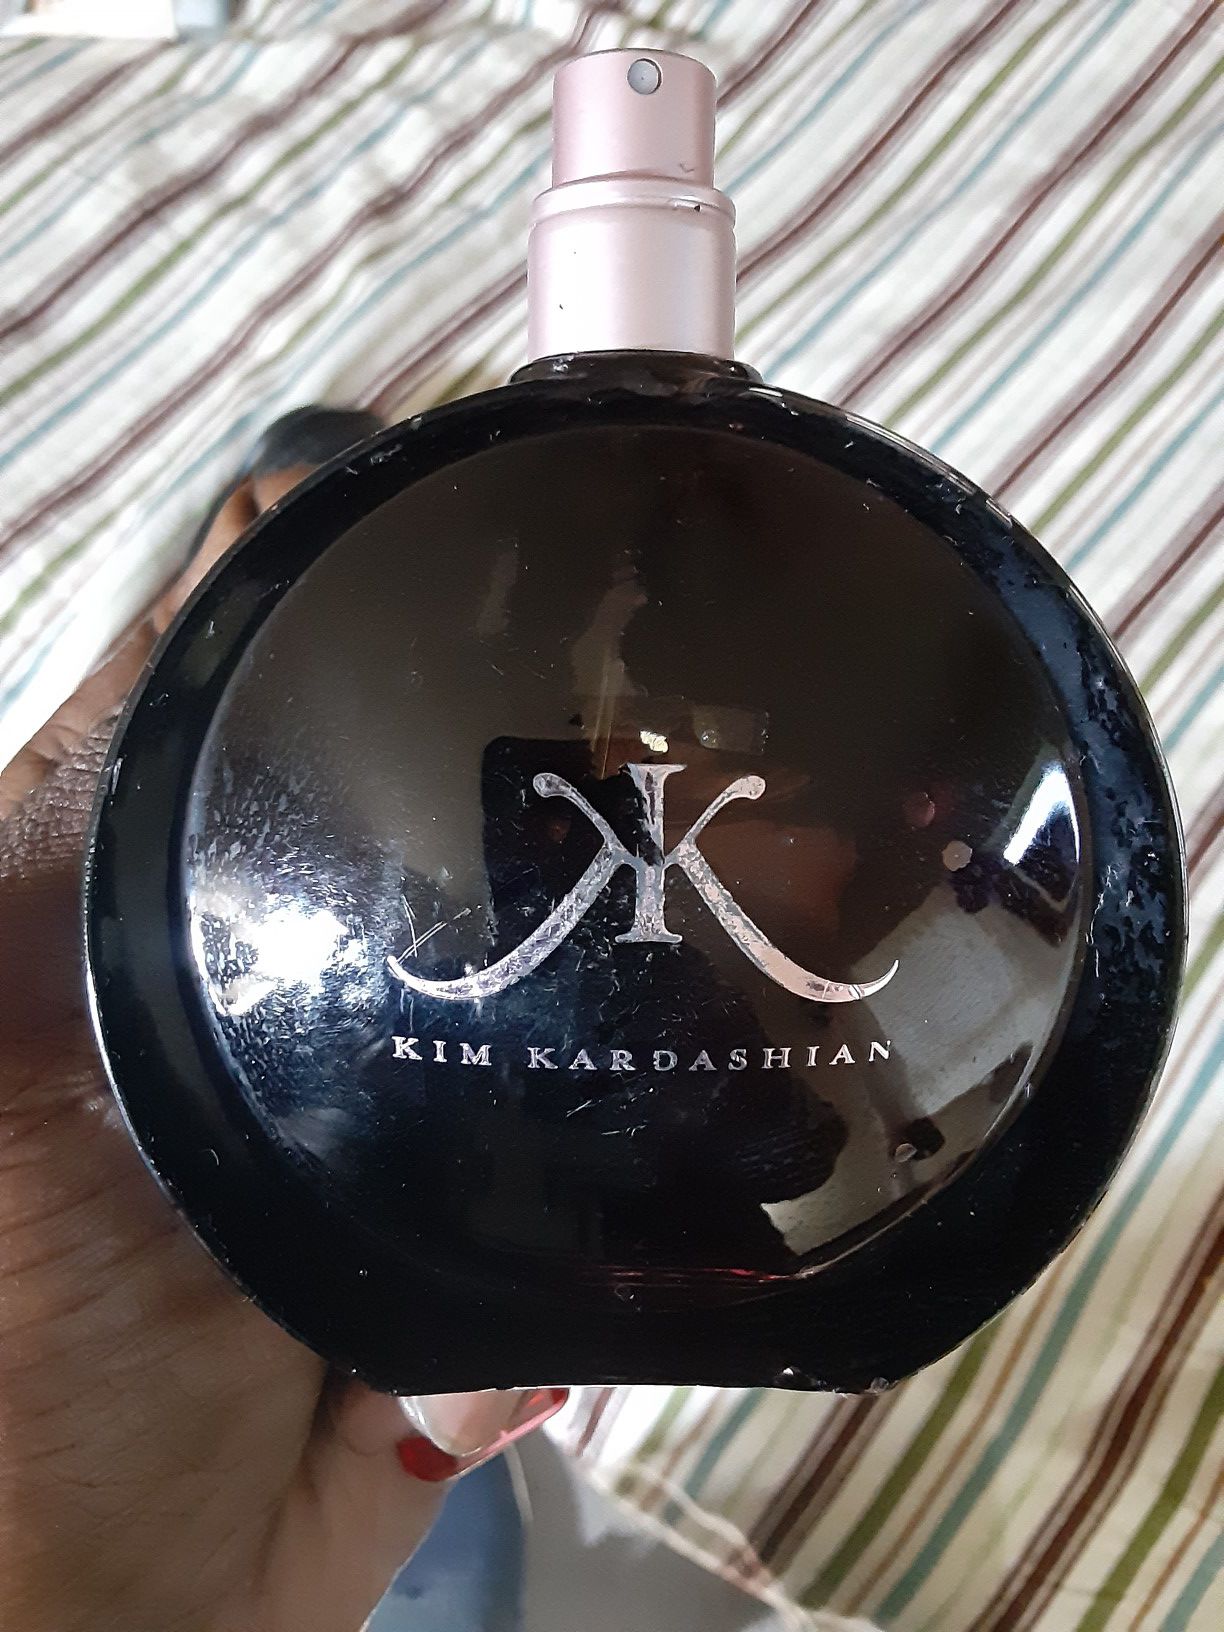 Kim kardashian perfume